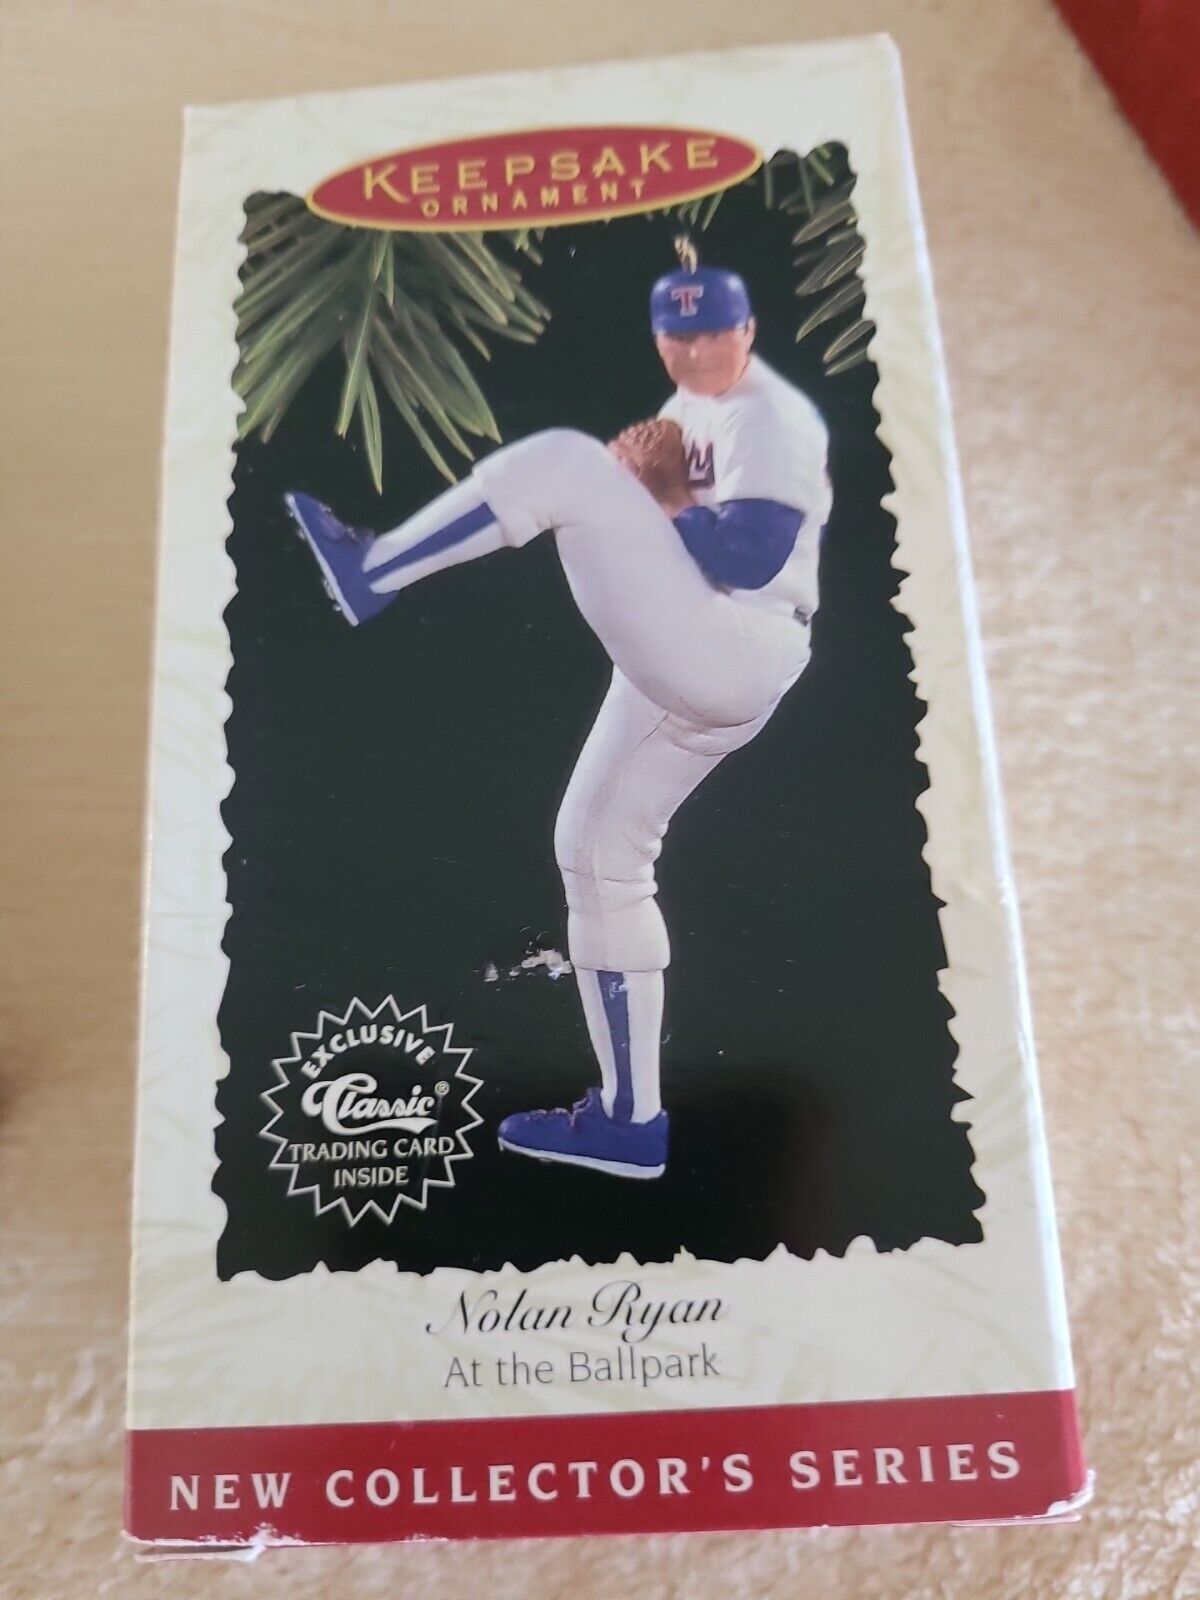 1996 Nolan Ryan Hallmark Keepsake Ornament #1 At the Ballpark Series New In Box